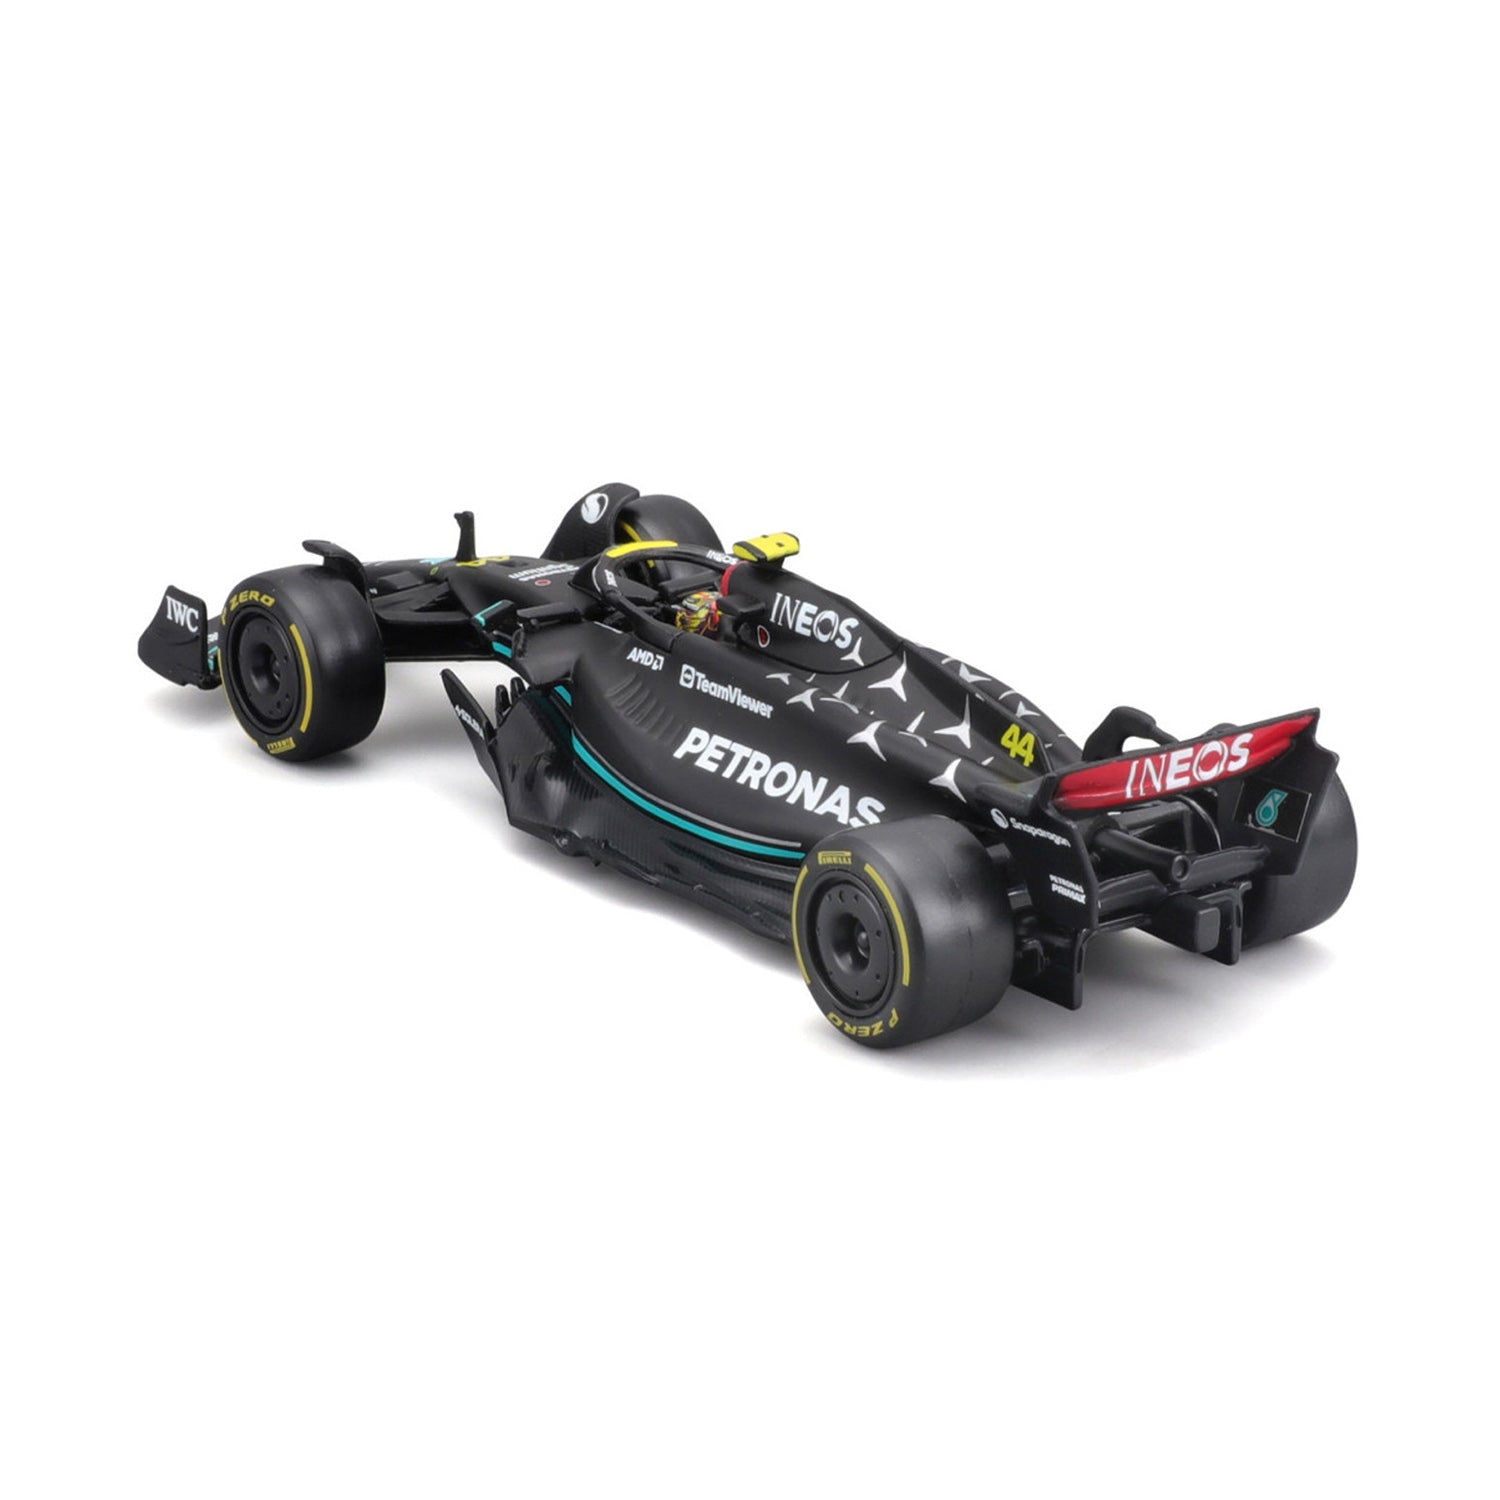 W14 #44 Lewis Hamilton Car Model 1:43 - Mercedes-AMG Petronas - Fueler store